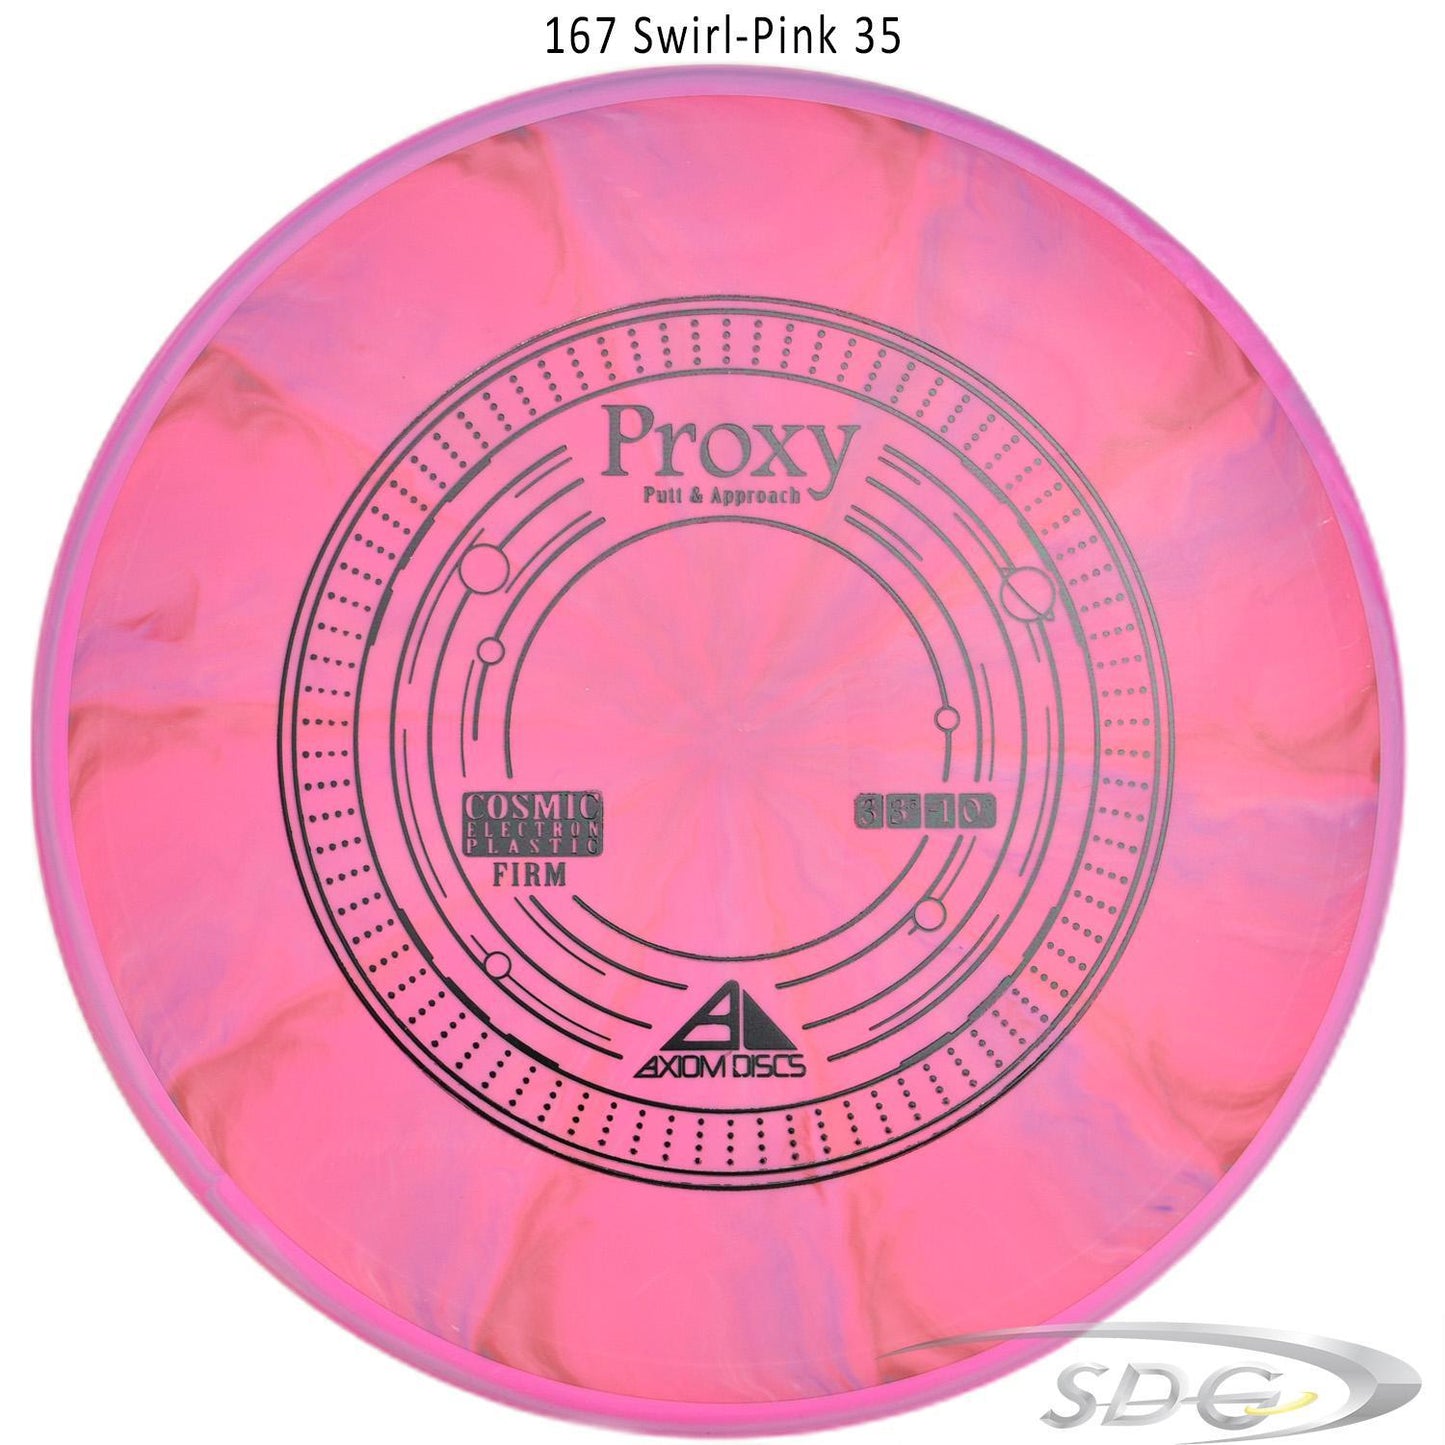 axiom-cosmic-electron-proxy-firm-disc-golf-putt-approach 167 Swirl-Pink 35 